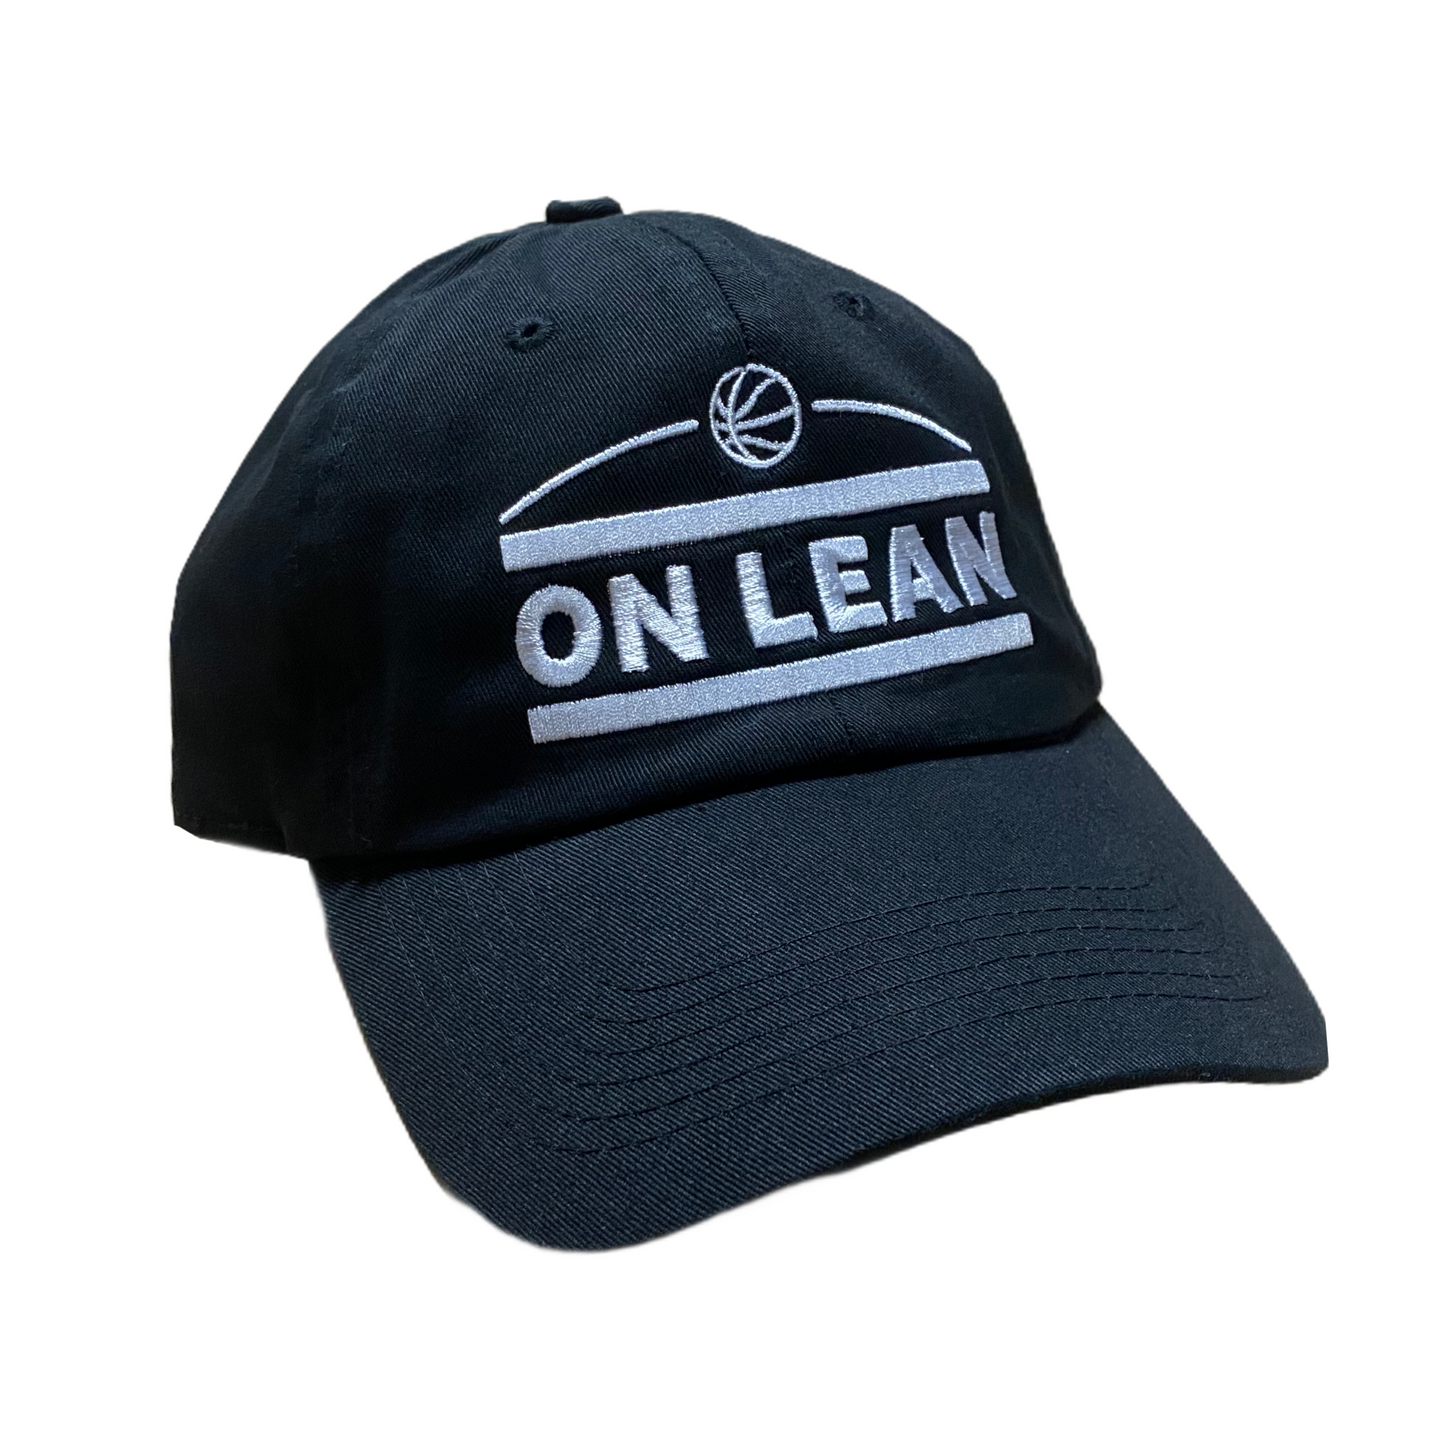 Lean dad hat